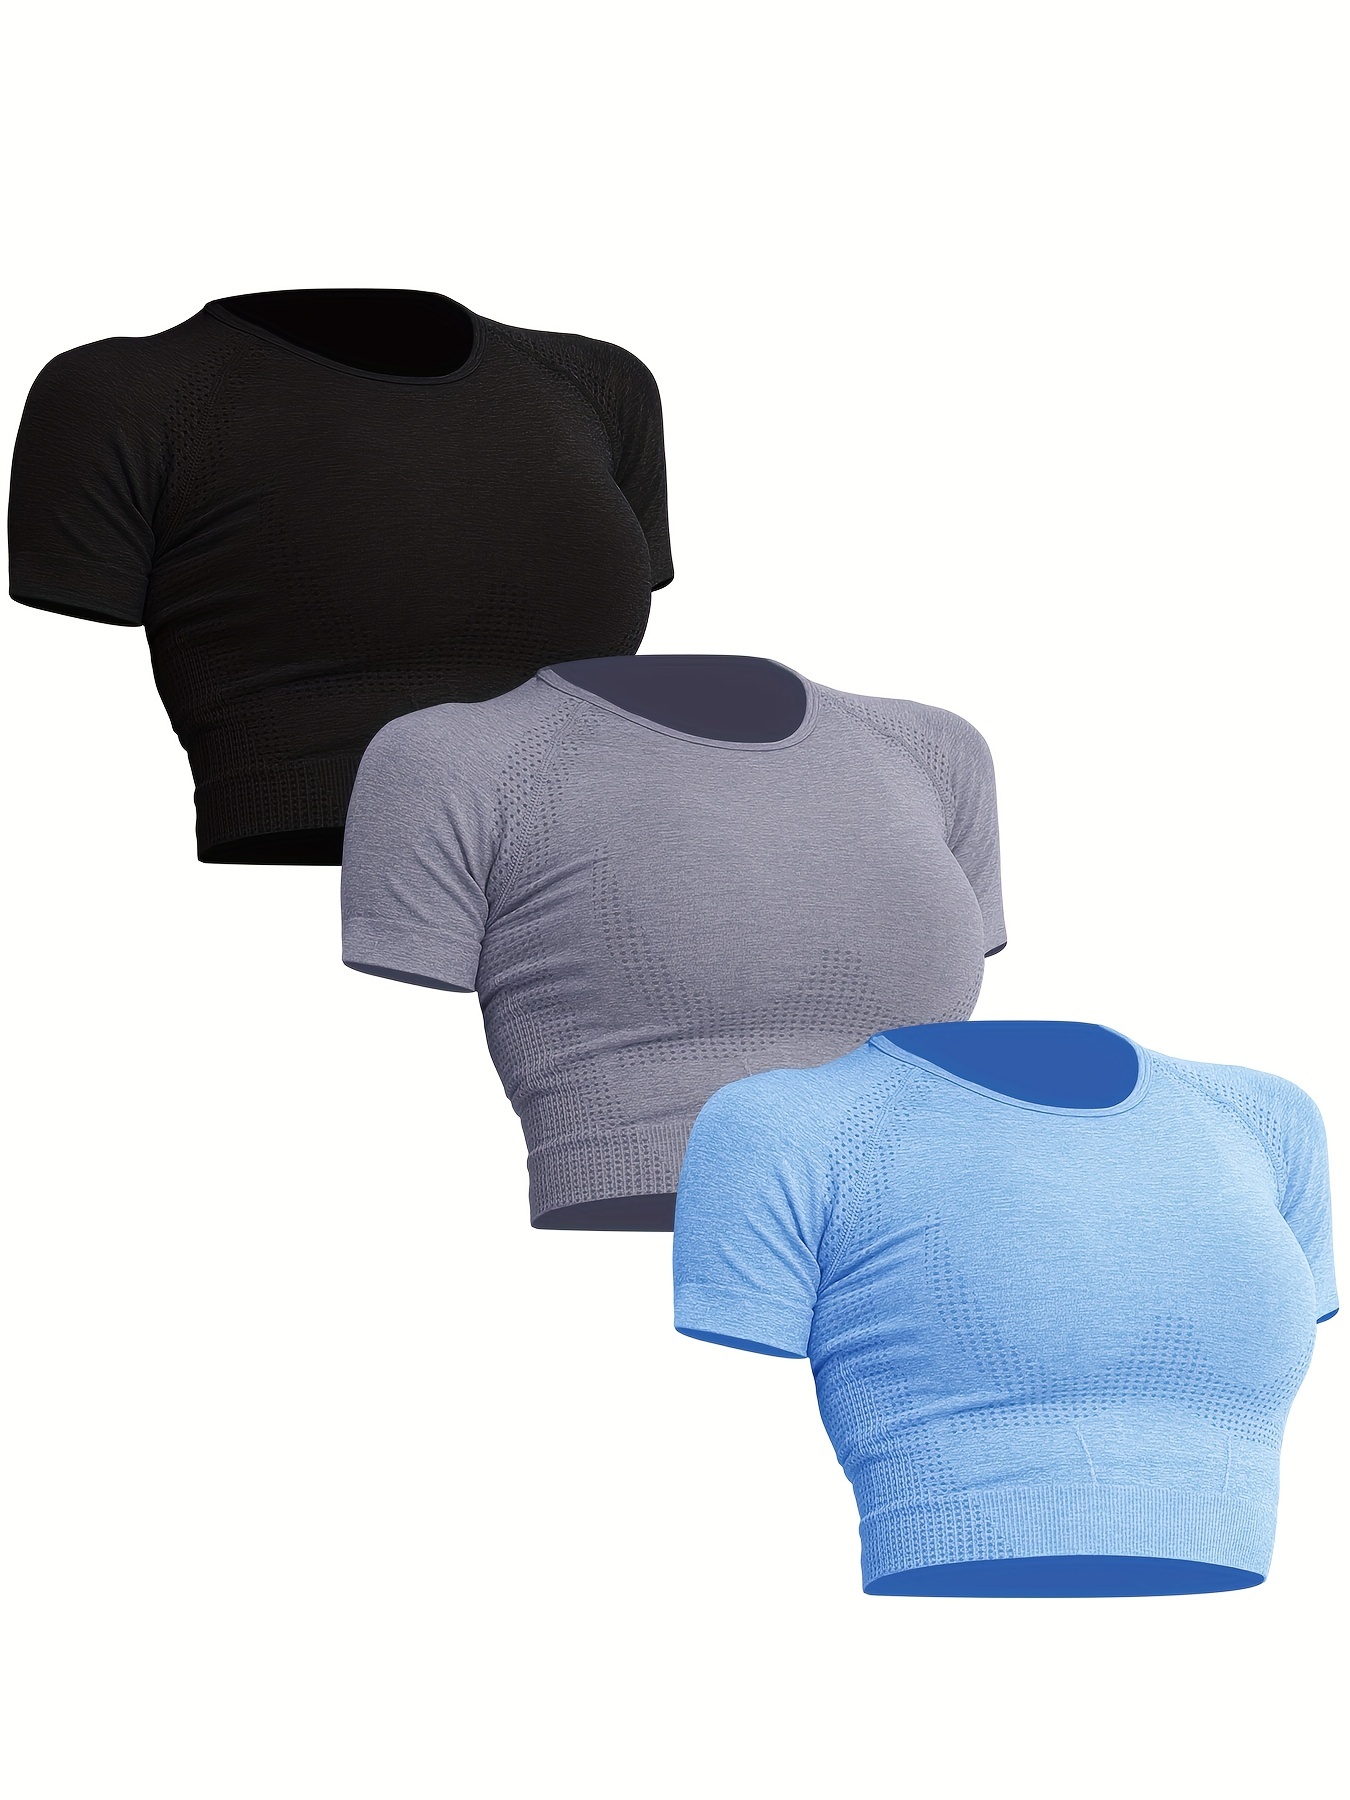 SOISOU Rib Fabric Yoga Shirts Crop Top Seamless Long Sleeve Sports Bra Sport  Fitness Workout Tops Gym t Shirt Women 7 Colors